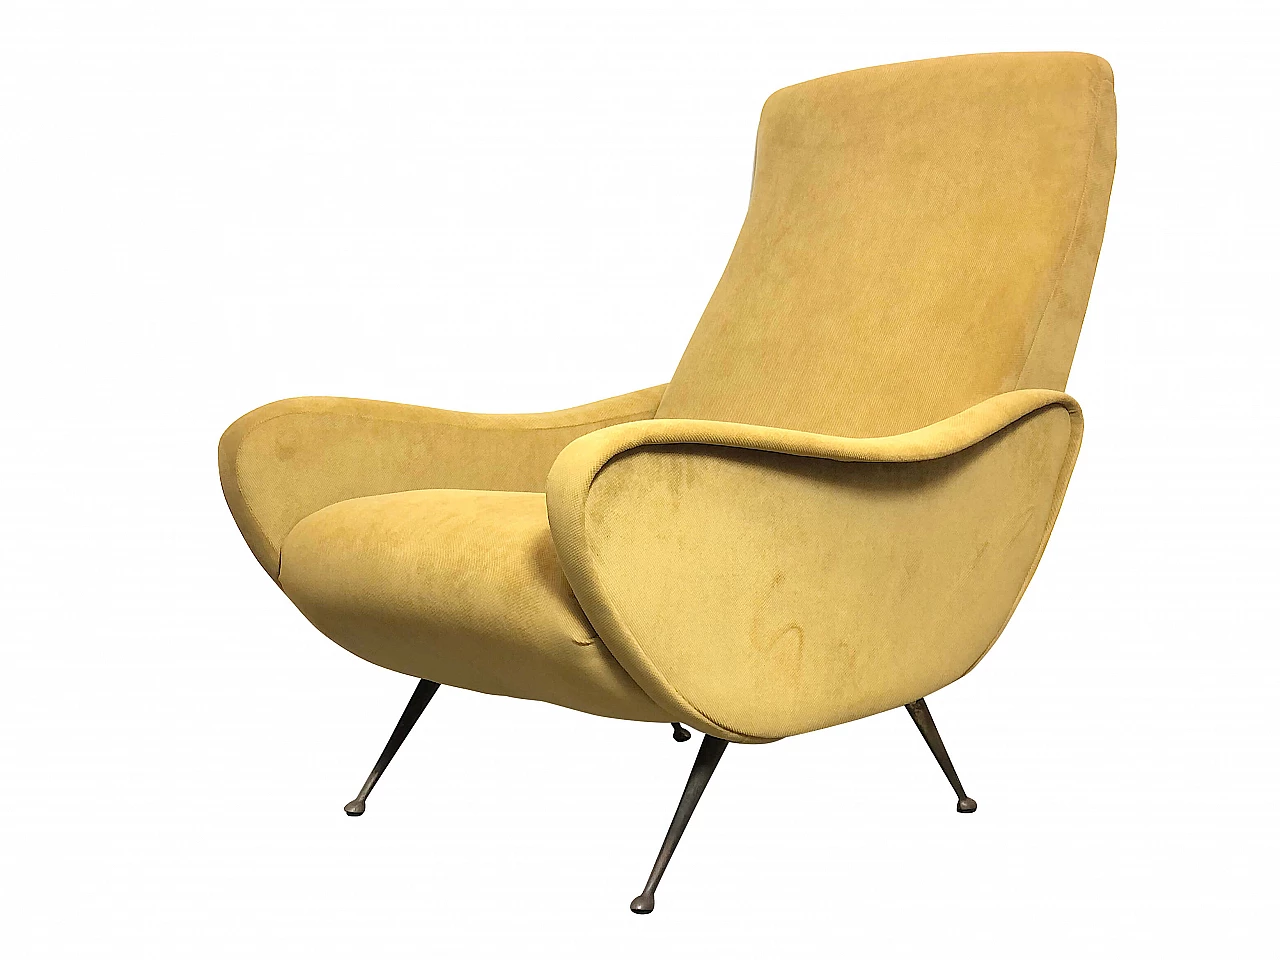 Lady style armchair by Marco Zanuso, 1950s 1327841